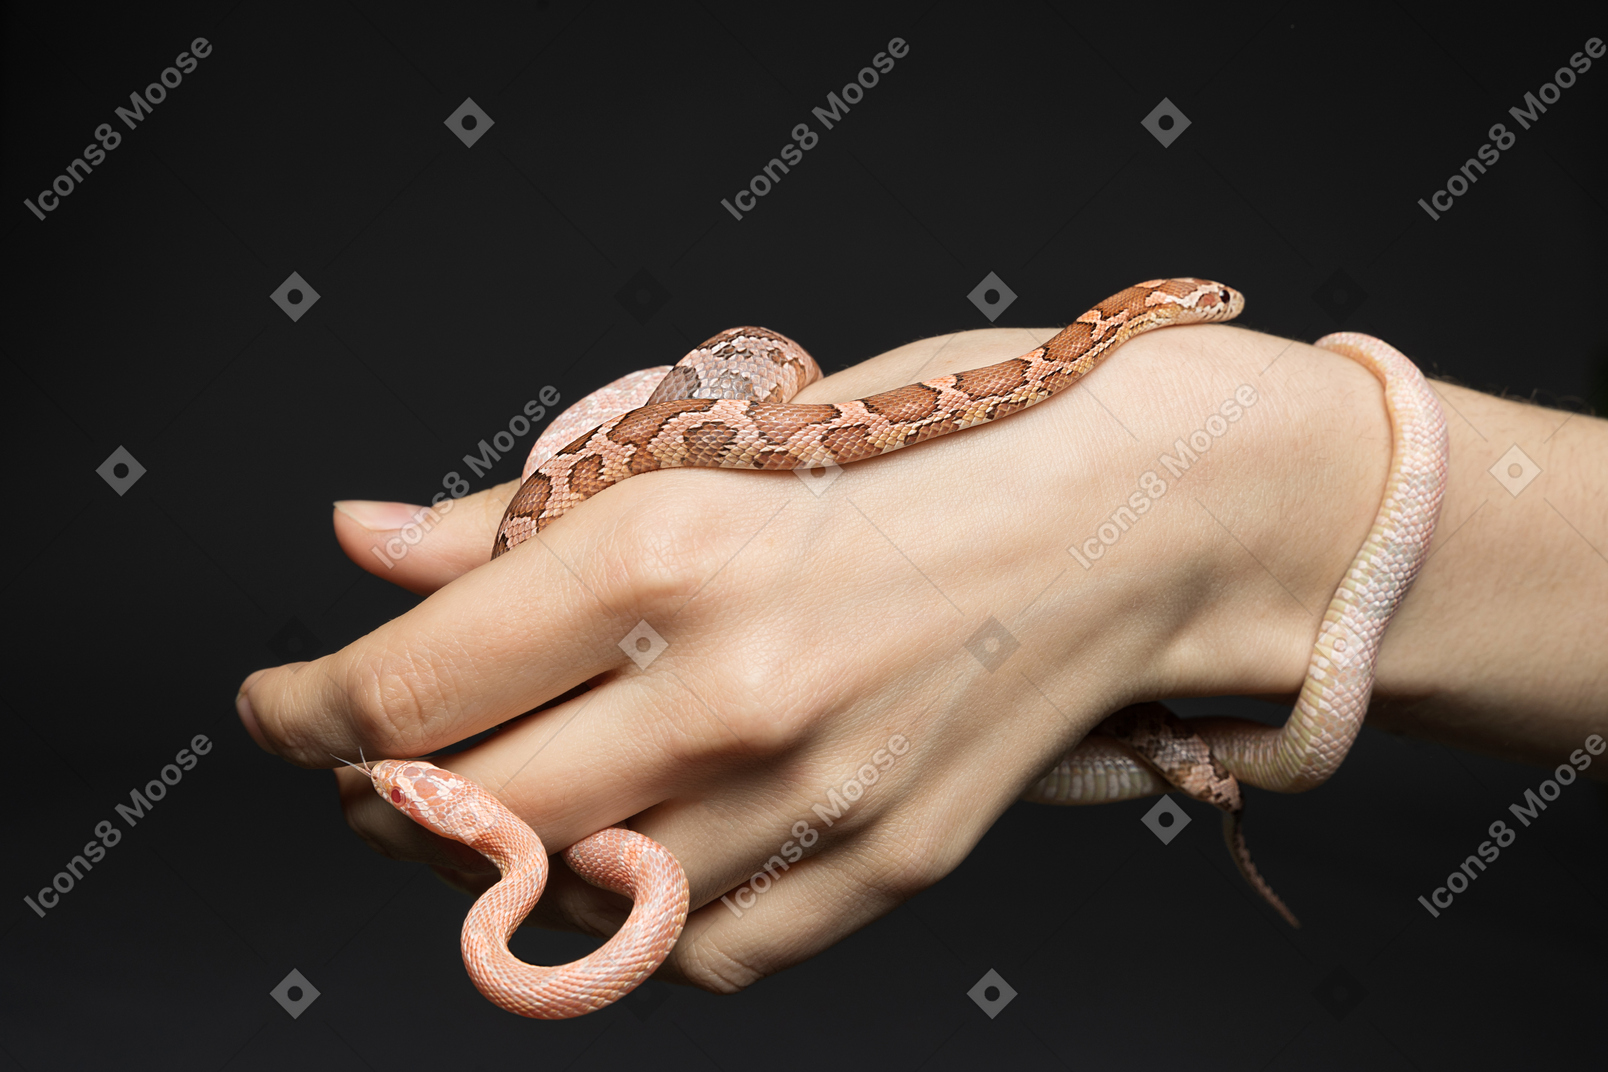 Две маленькие кукурузные змеи на руке человека